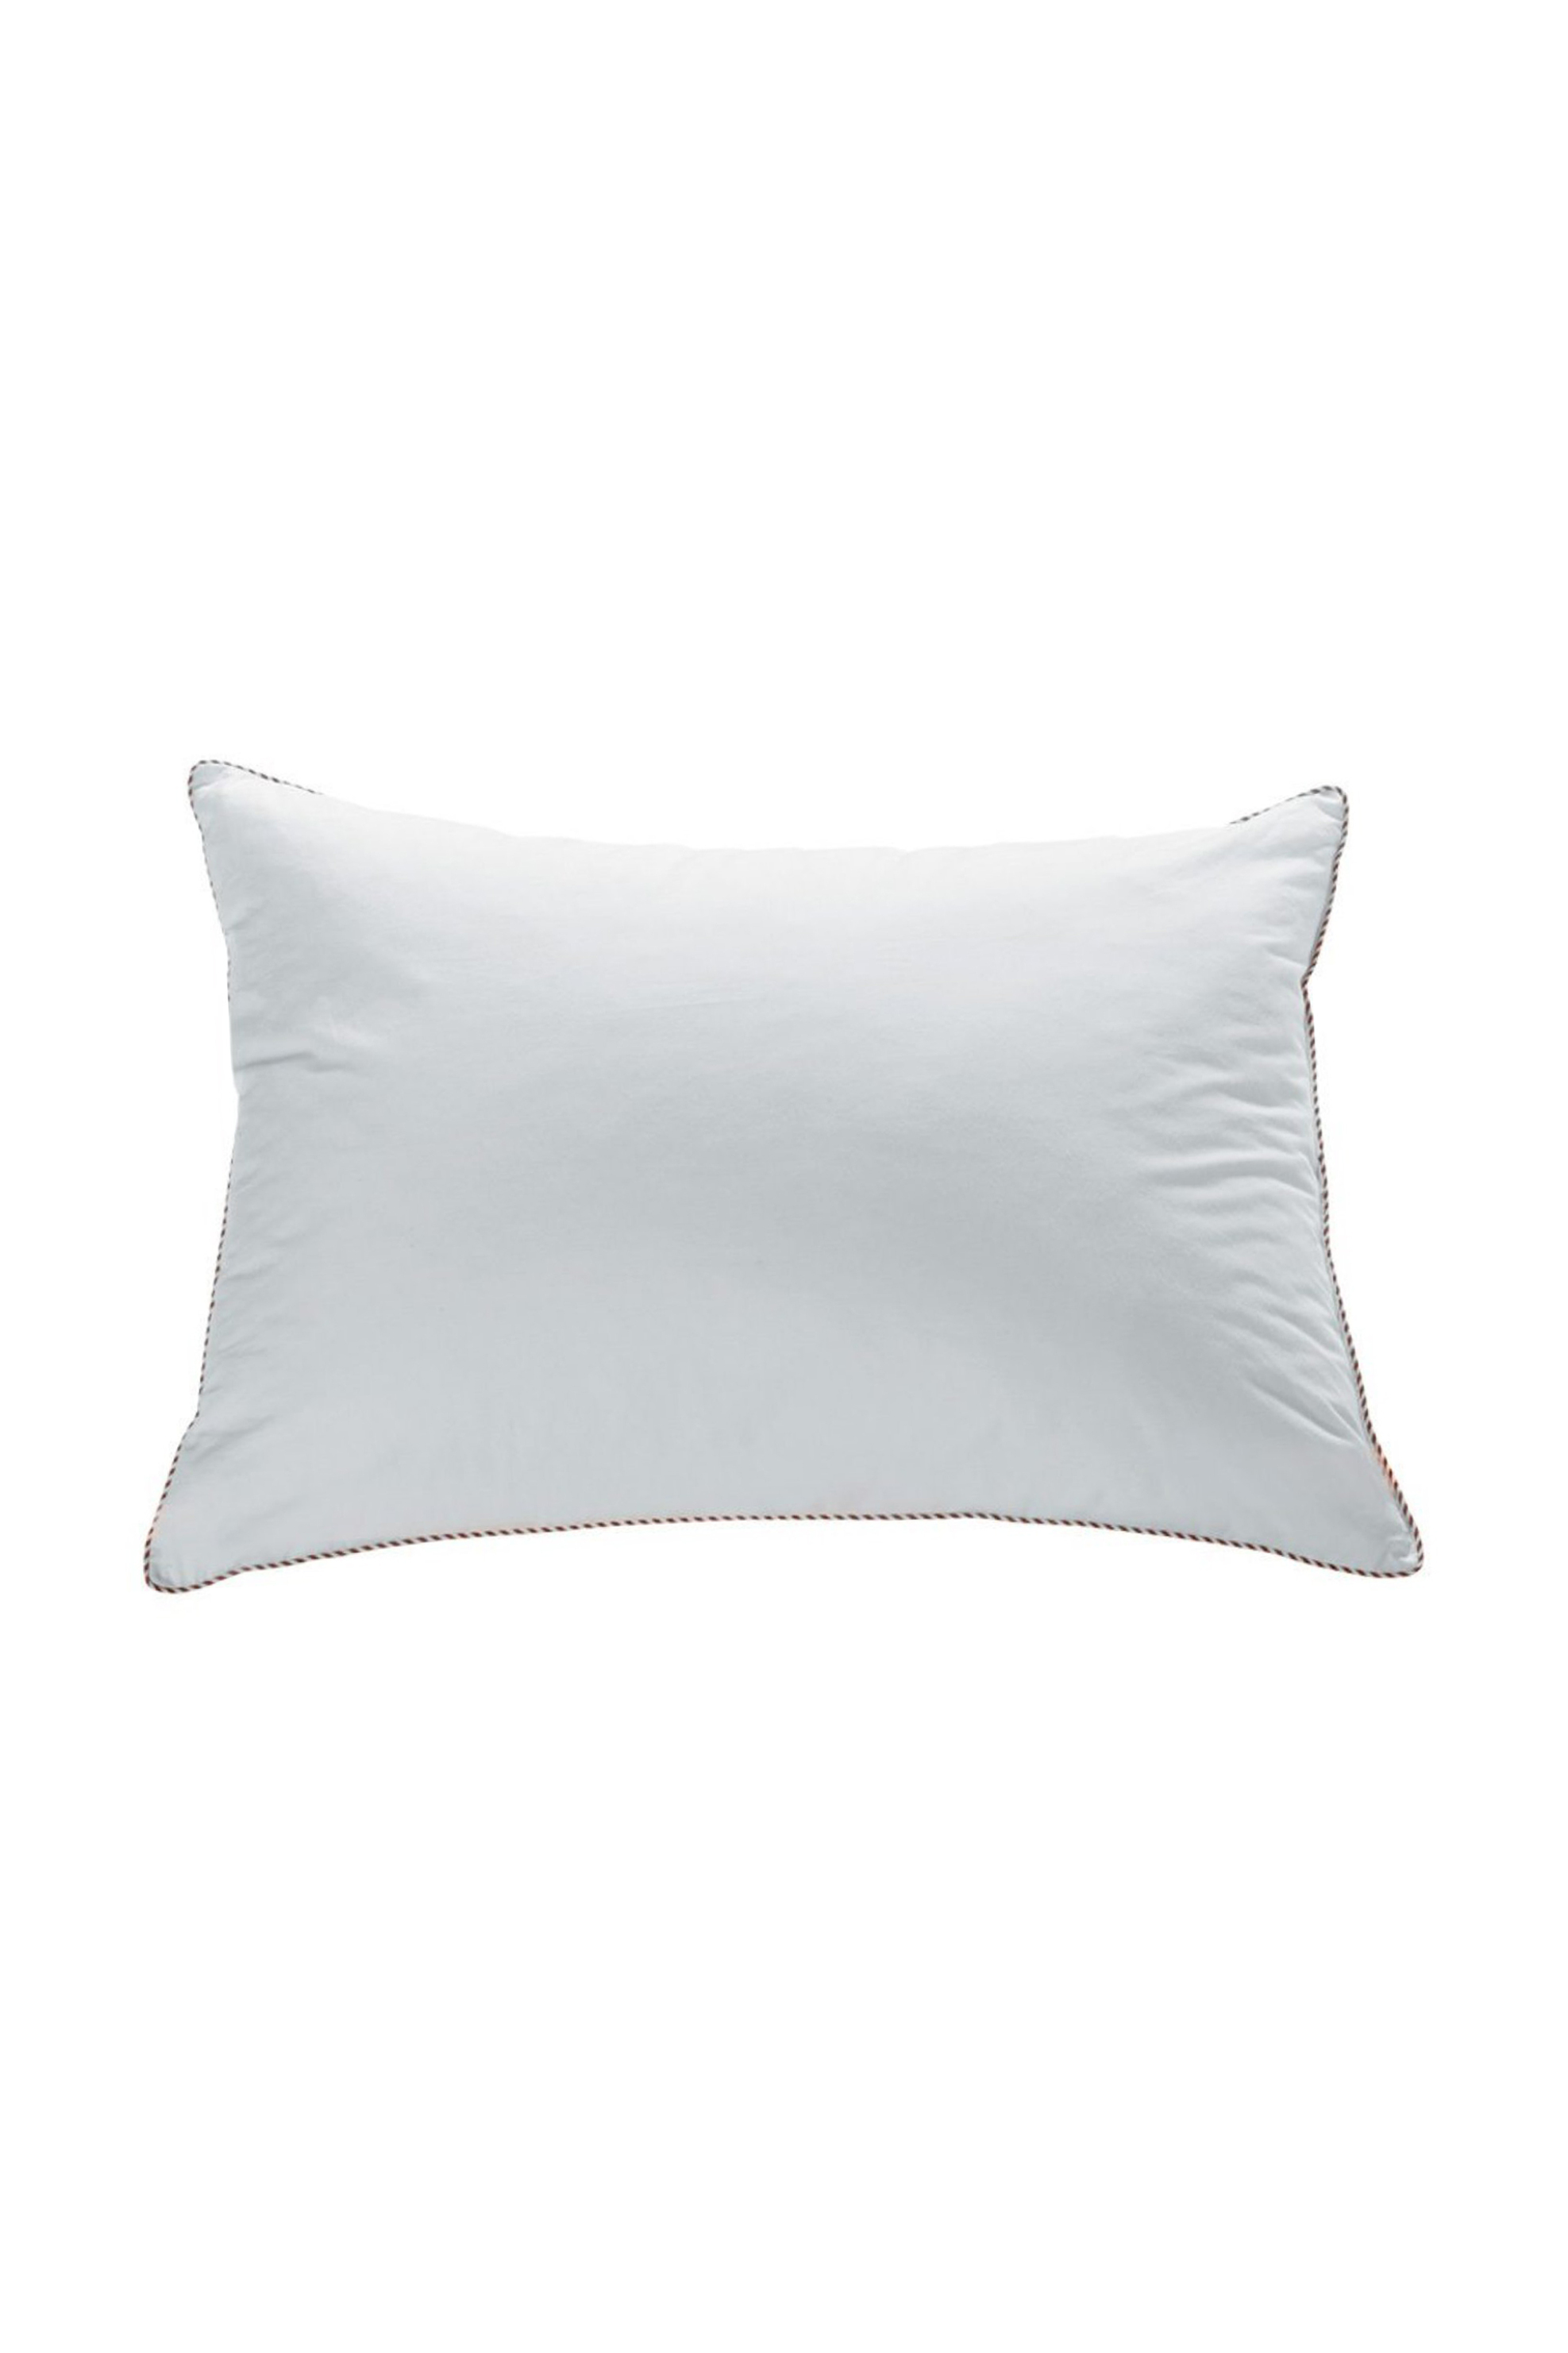 Kentia βρεφικό μαξιλάρι ύπνου "Hollow Baby" 40 x 30 cm - 000026680 200890801094